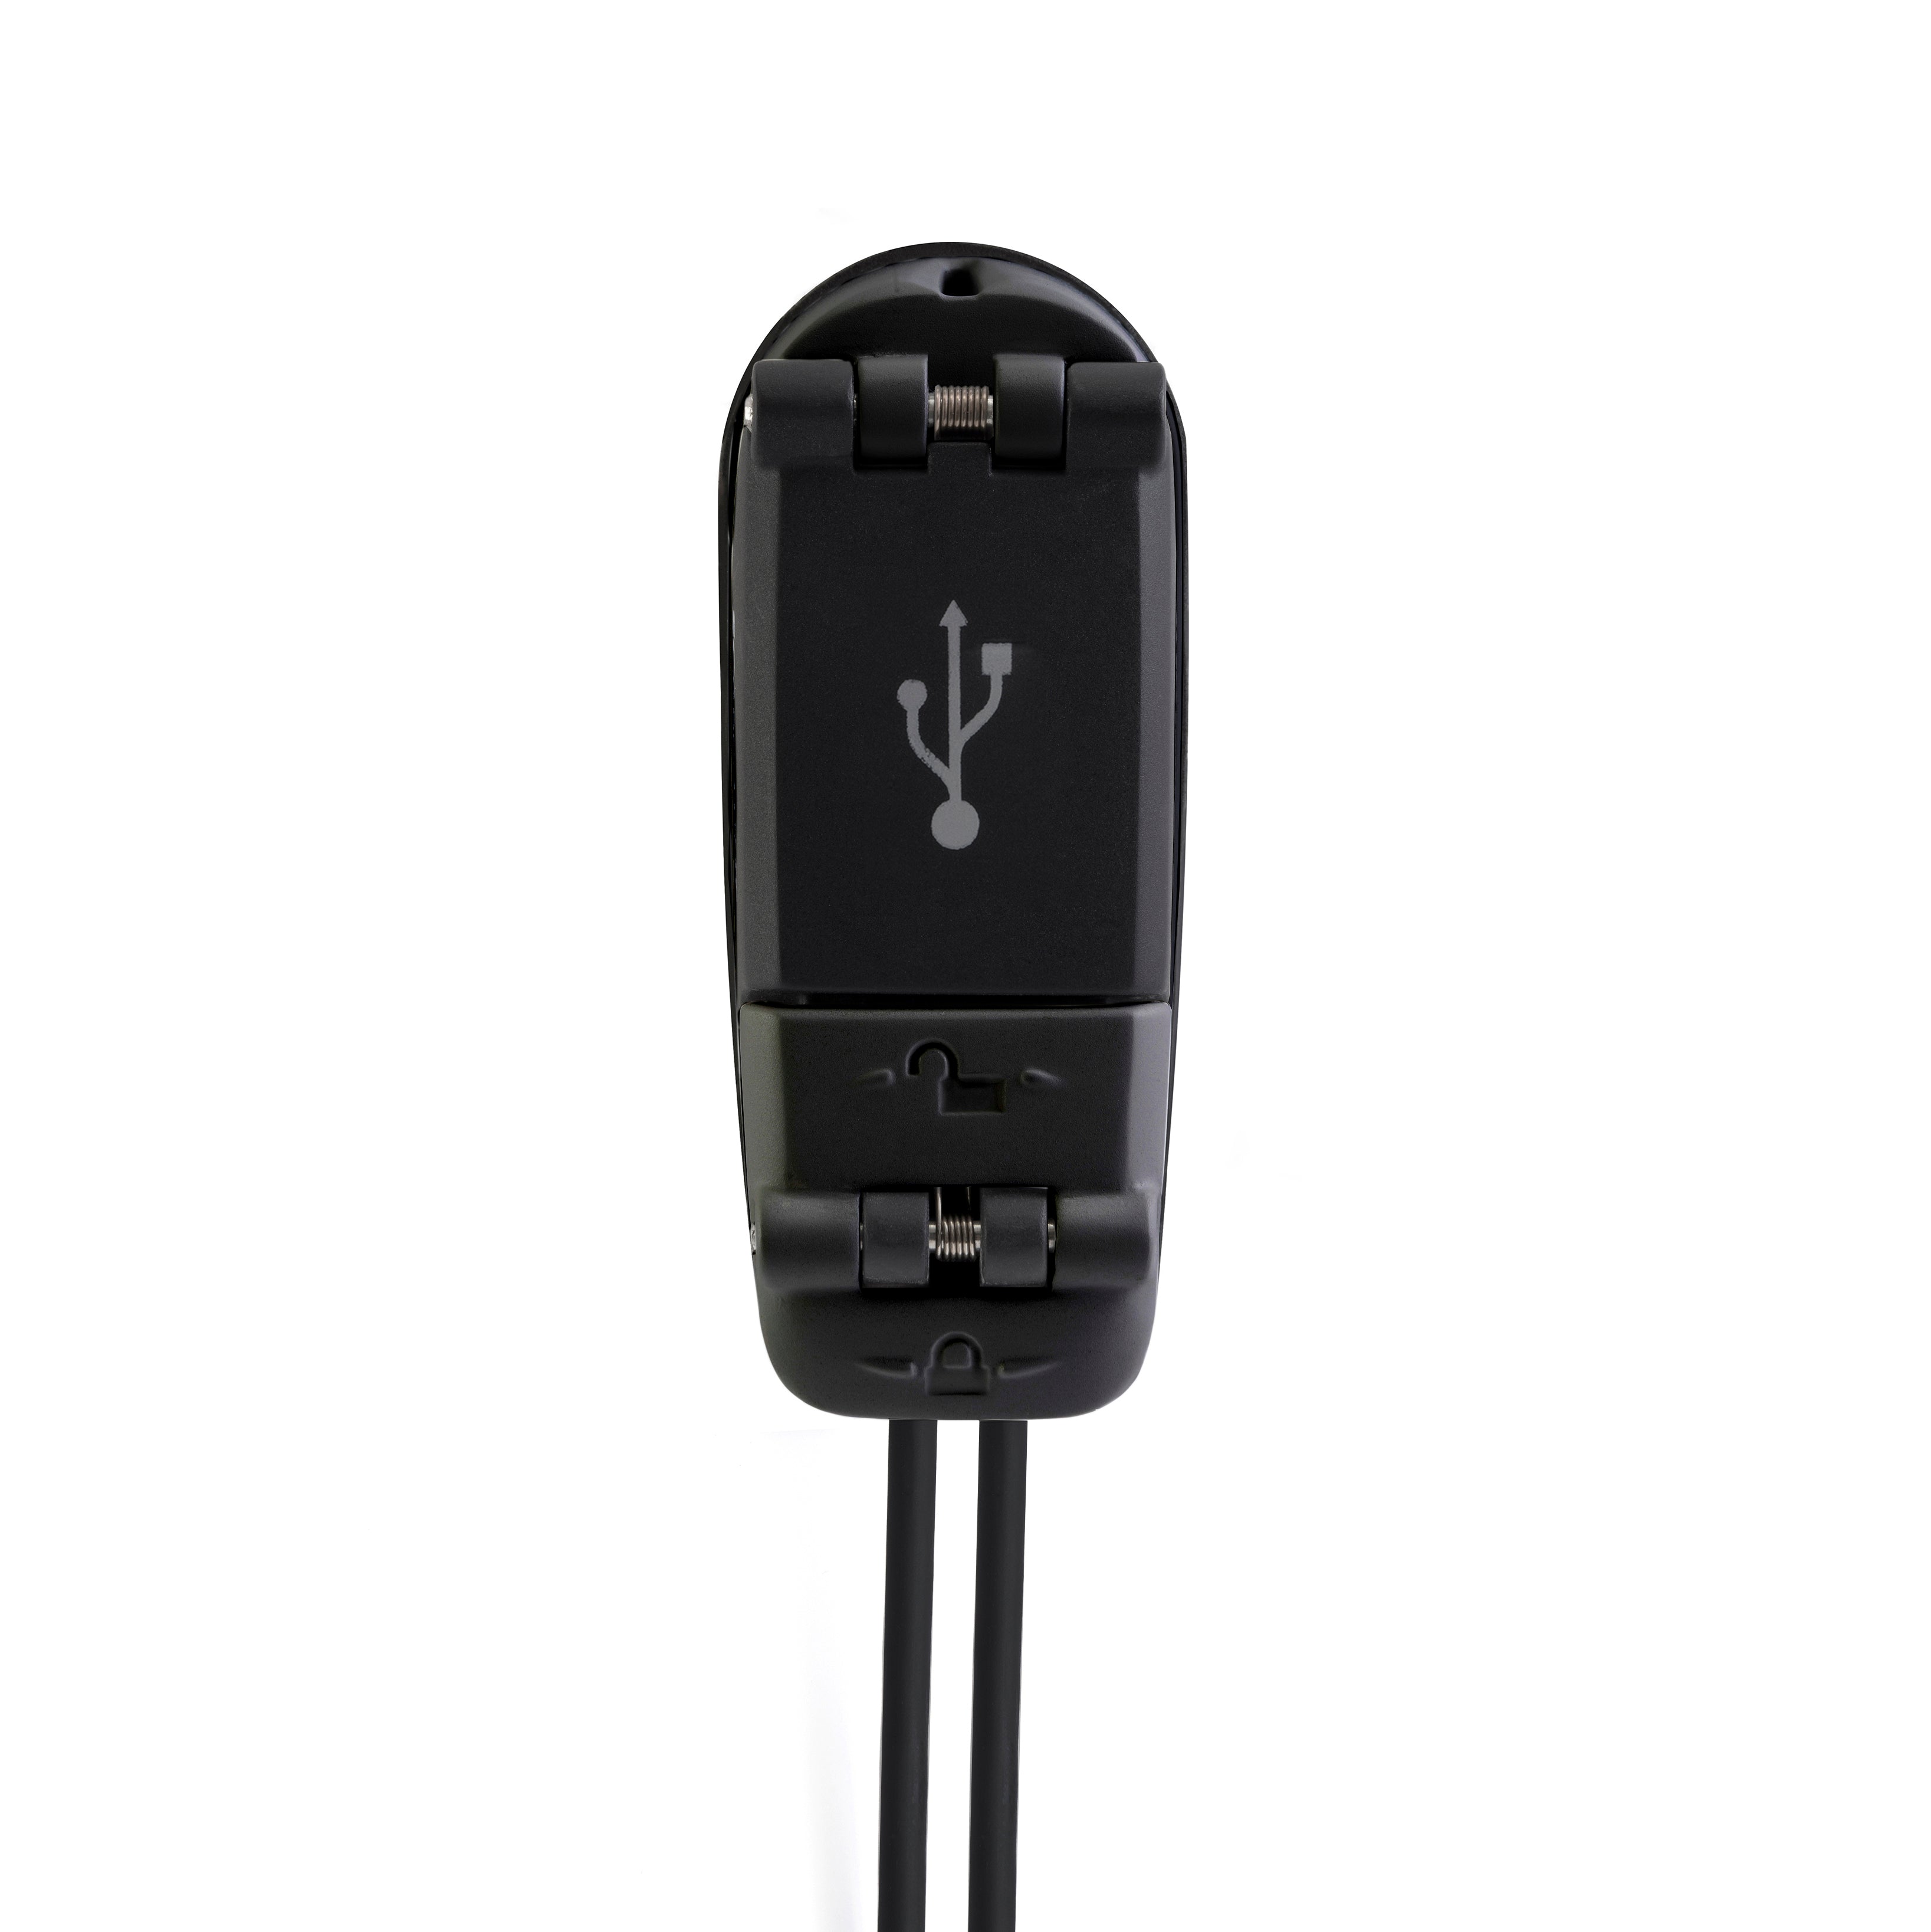 ROKK charge+ Waterproof Dual USB Charge Socket 12V / 24V – ROKK Store